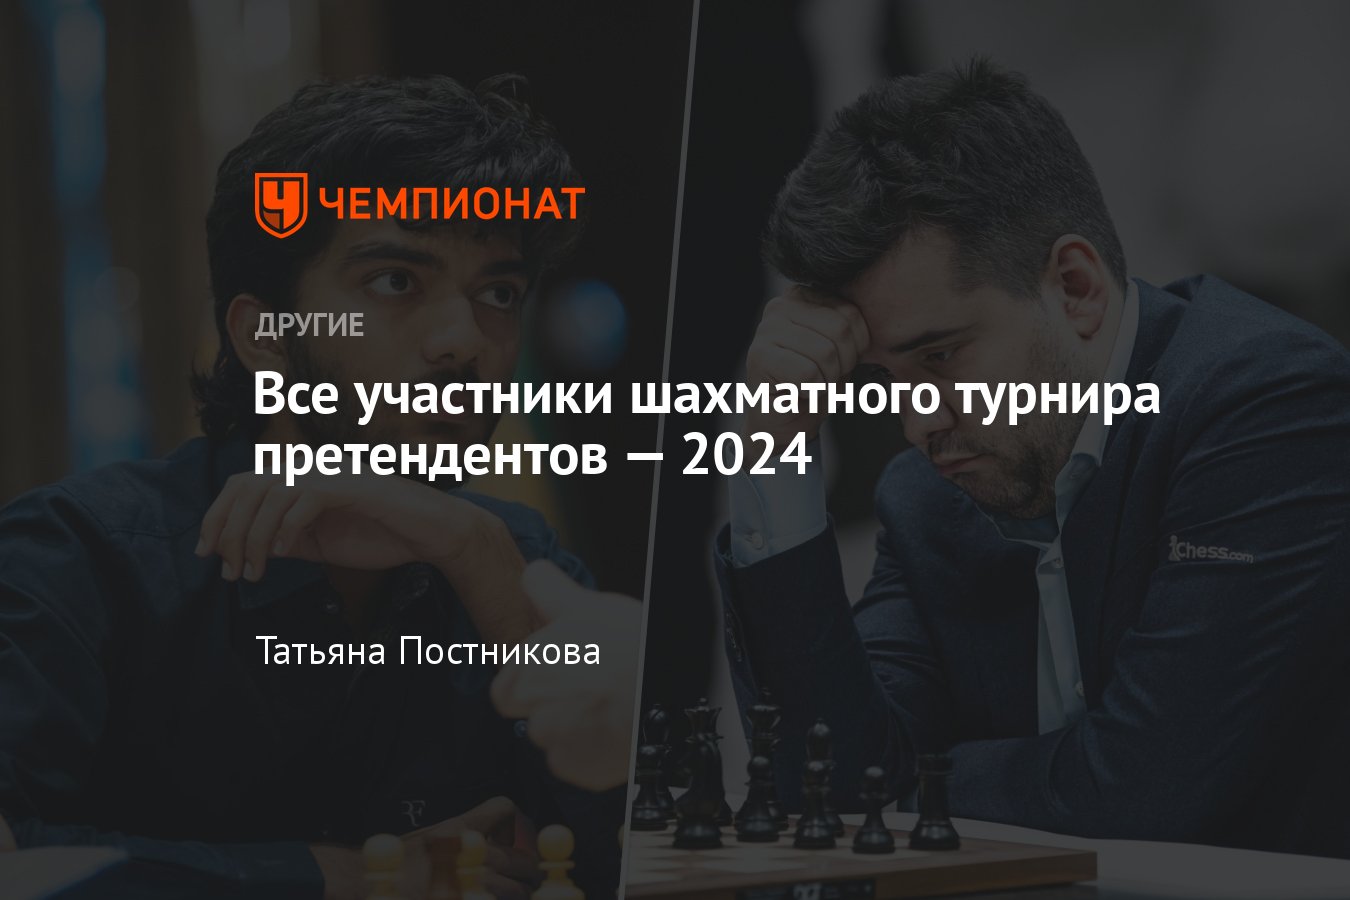 Шахматы турнир претендентов 2024 трансляция